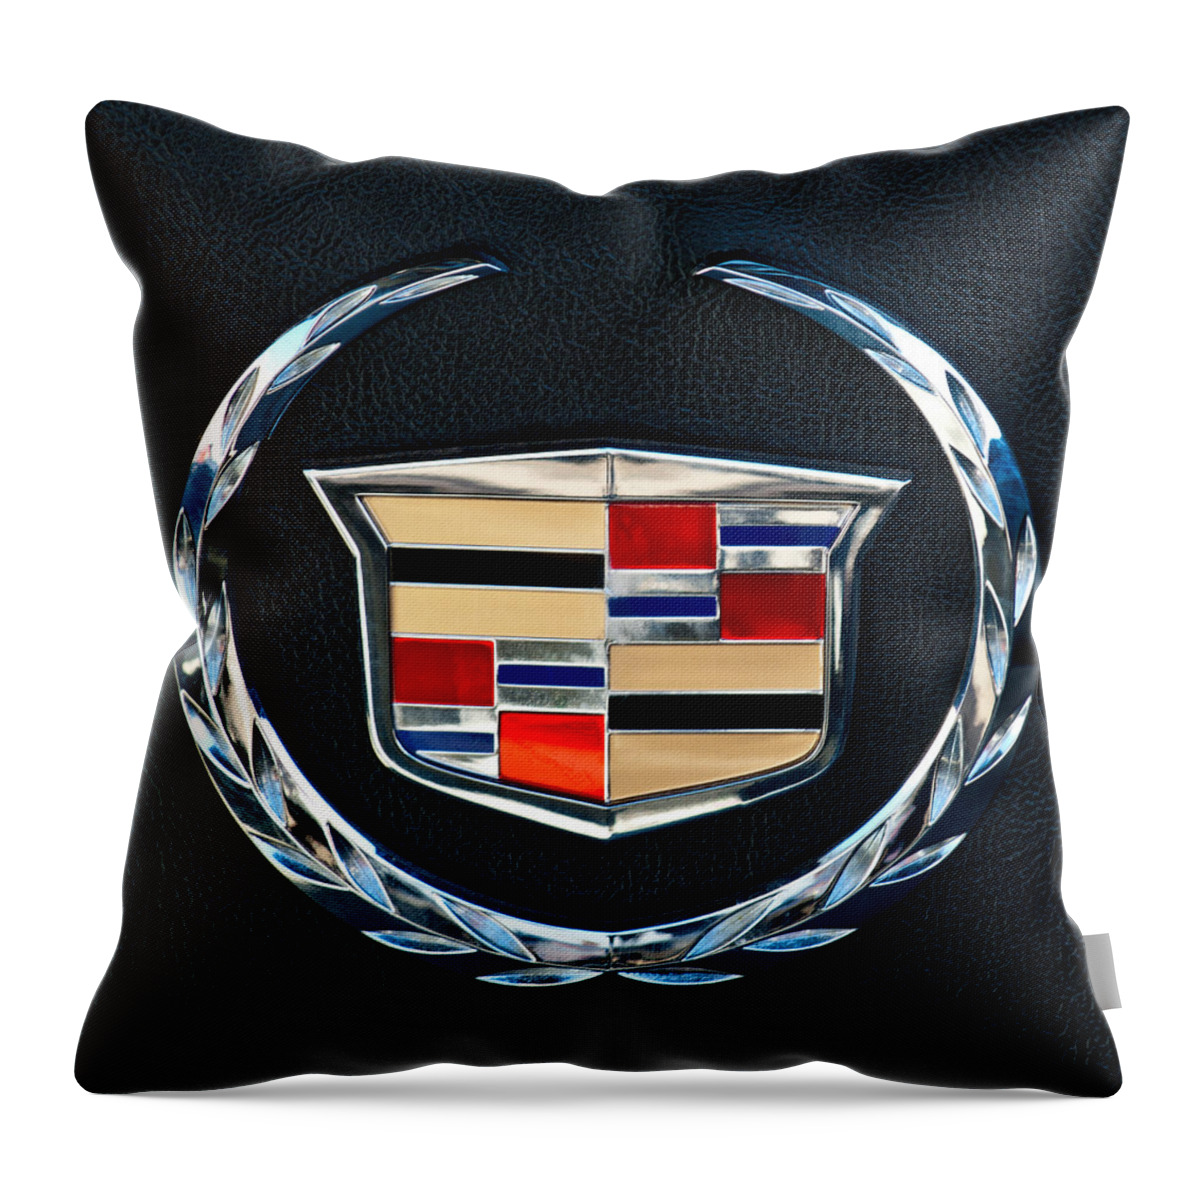 Cadillac Emblem Throw Pillow featuring the photograph Cadillac Emblem by Jill Reger